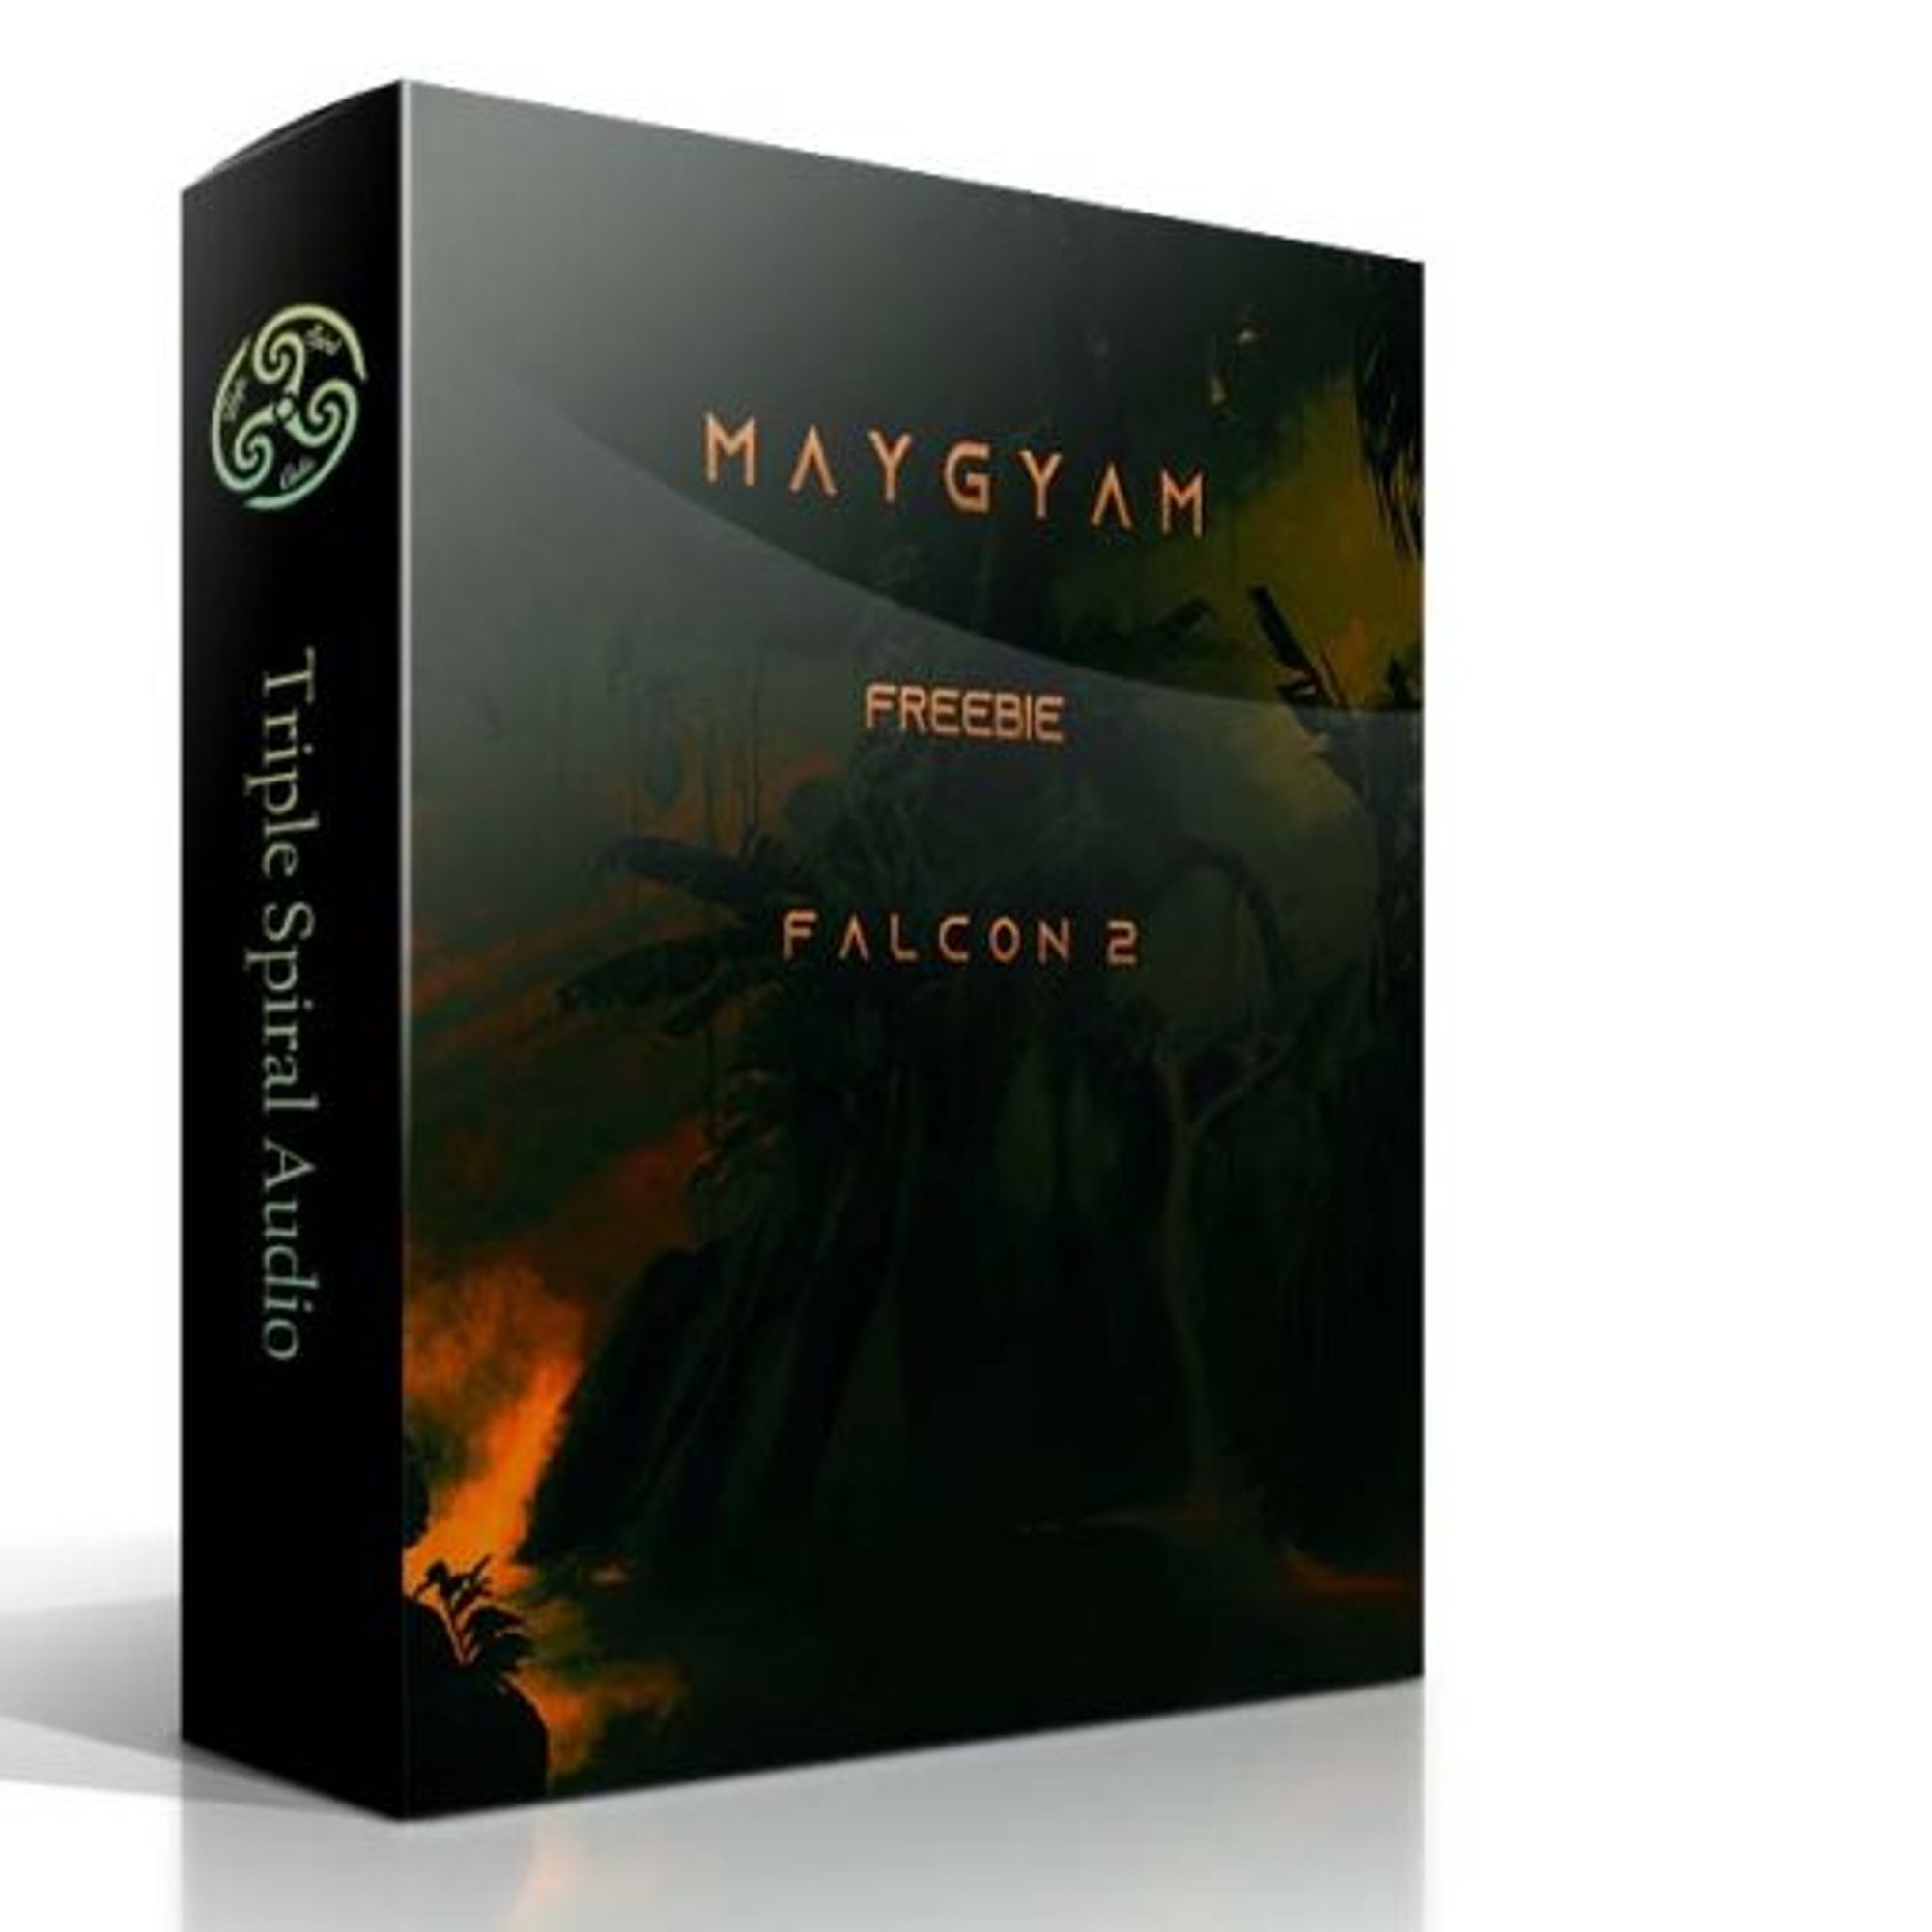 Maygyam Freebie for Falcon 2 | Triple Spiral Audio